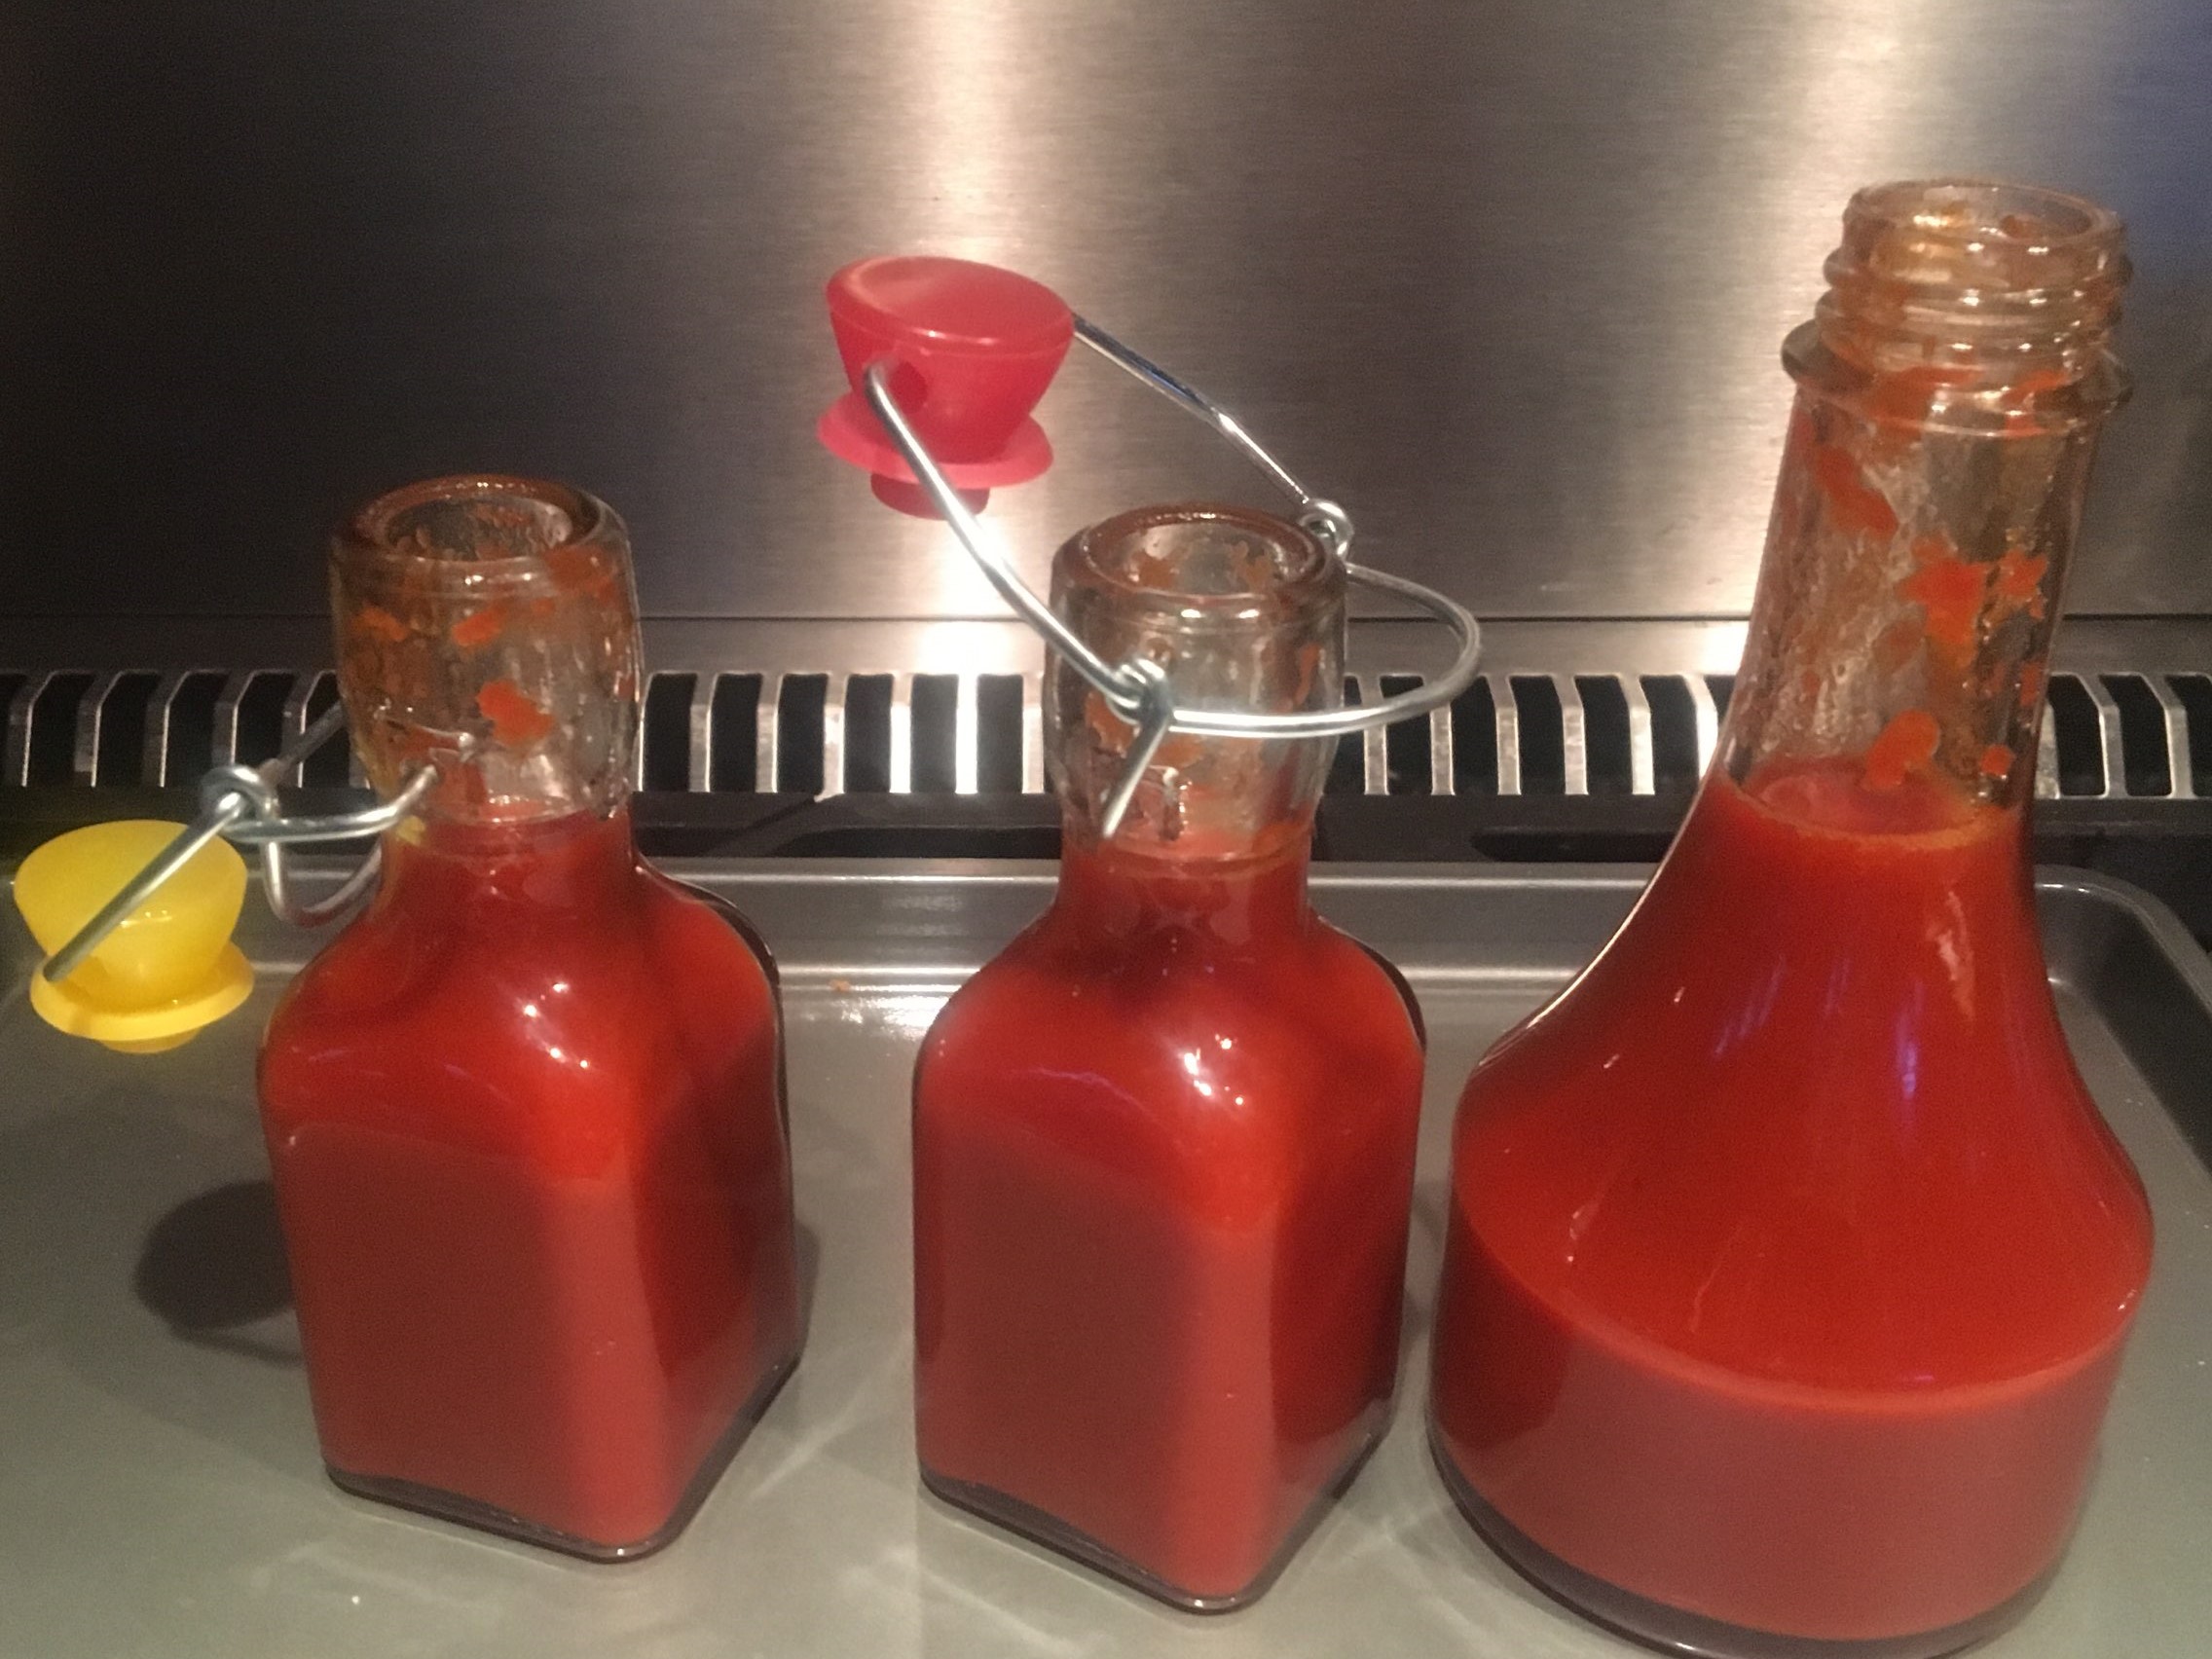 How To Make Homemade Sriracha Sauce Recipe Allrecipes